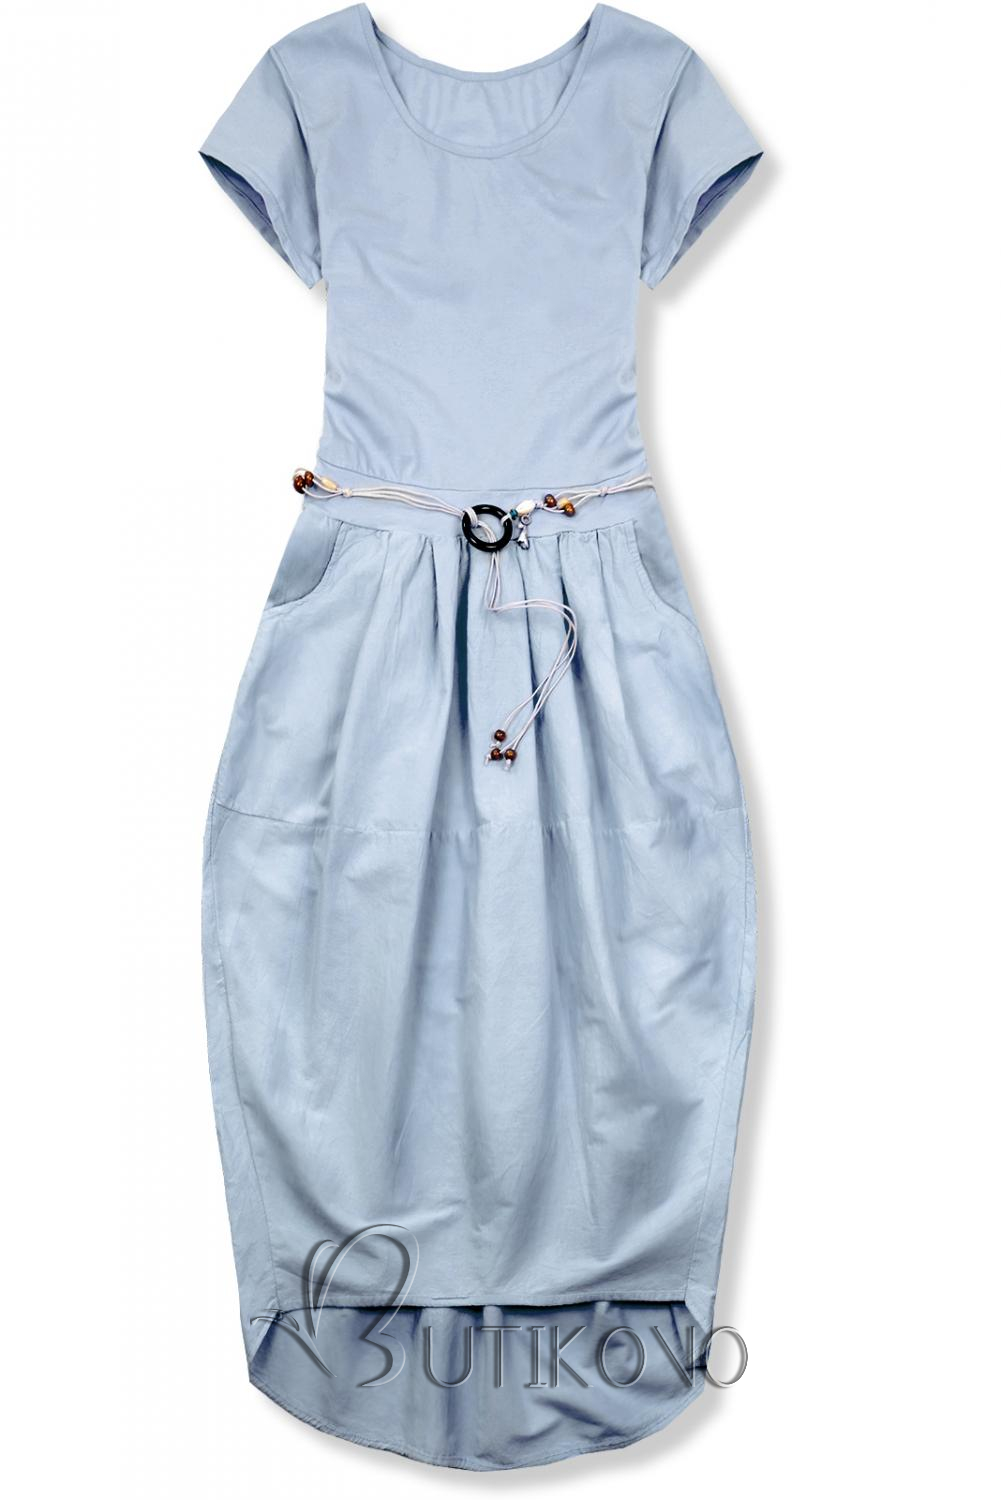 Pastelovo modré midi šaty v basic štýle